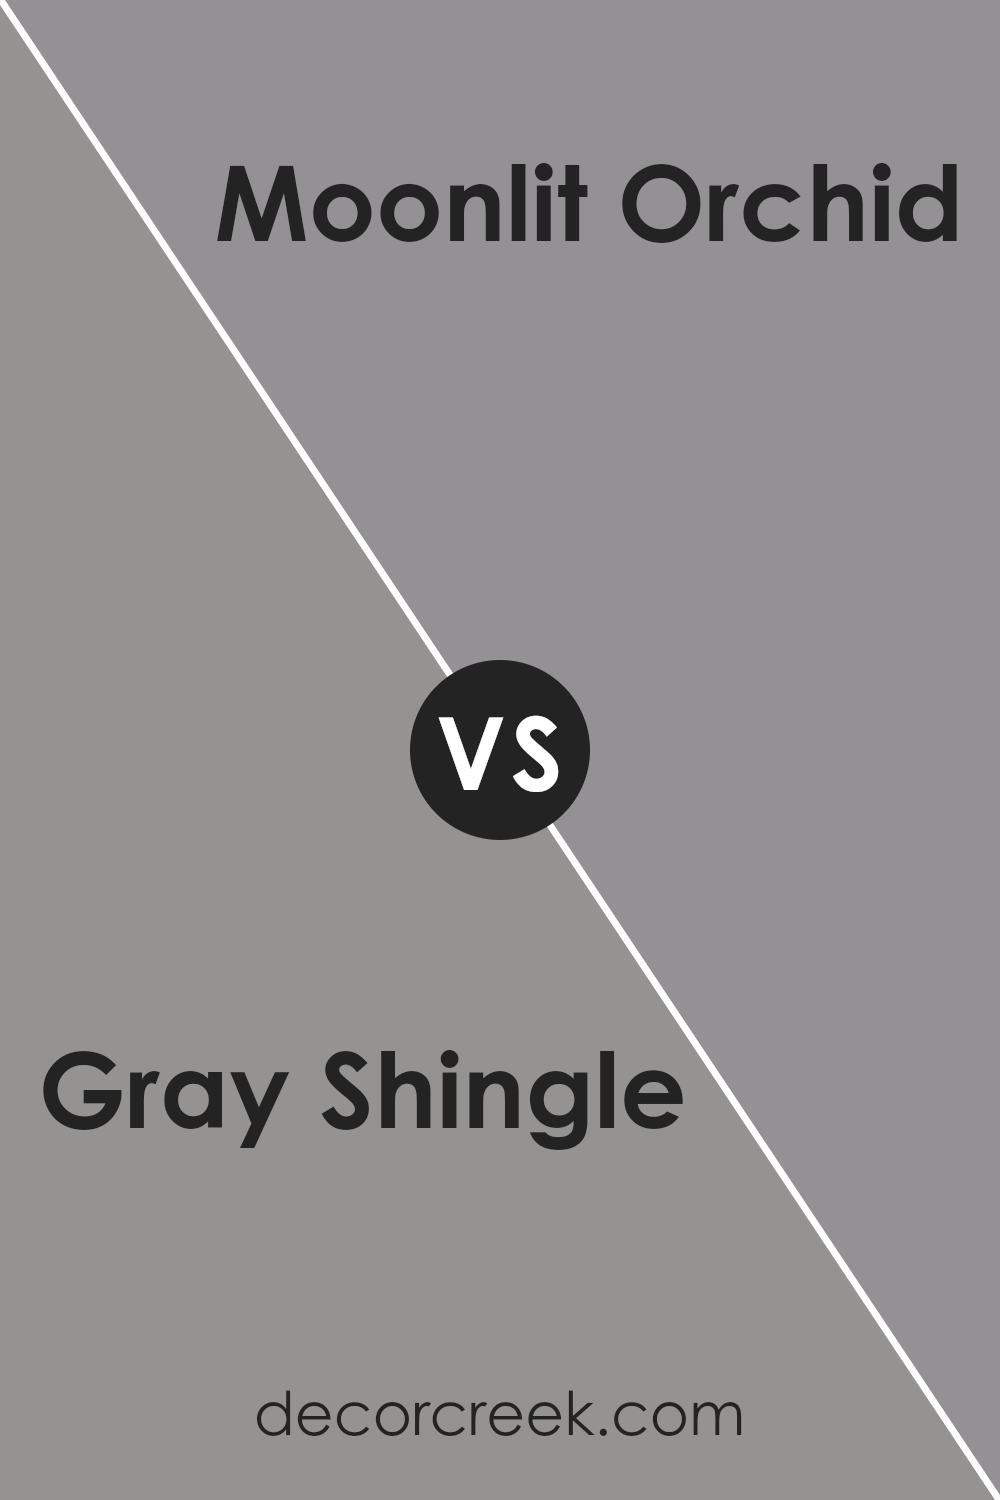 gray_shingle_sw_7670_vs_moonlit_orchid_sw_9153